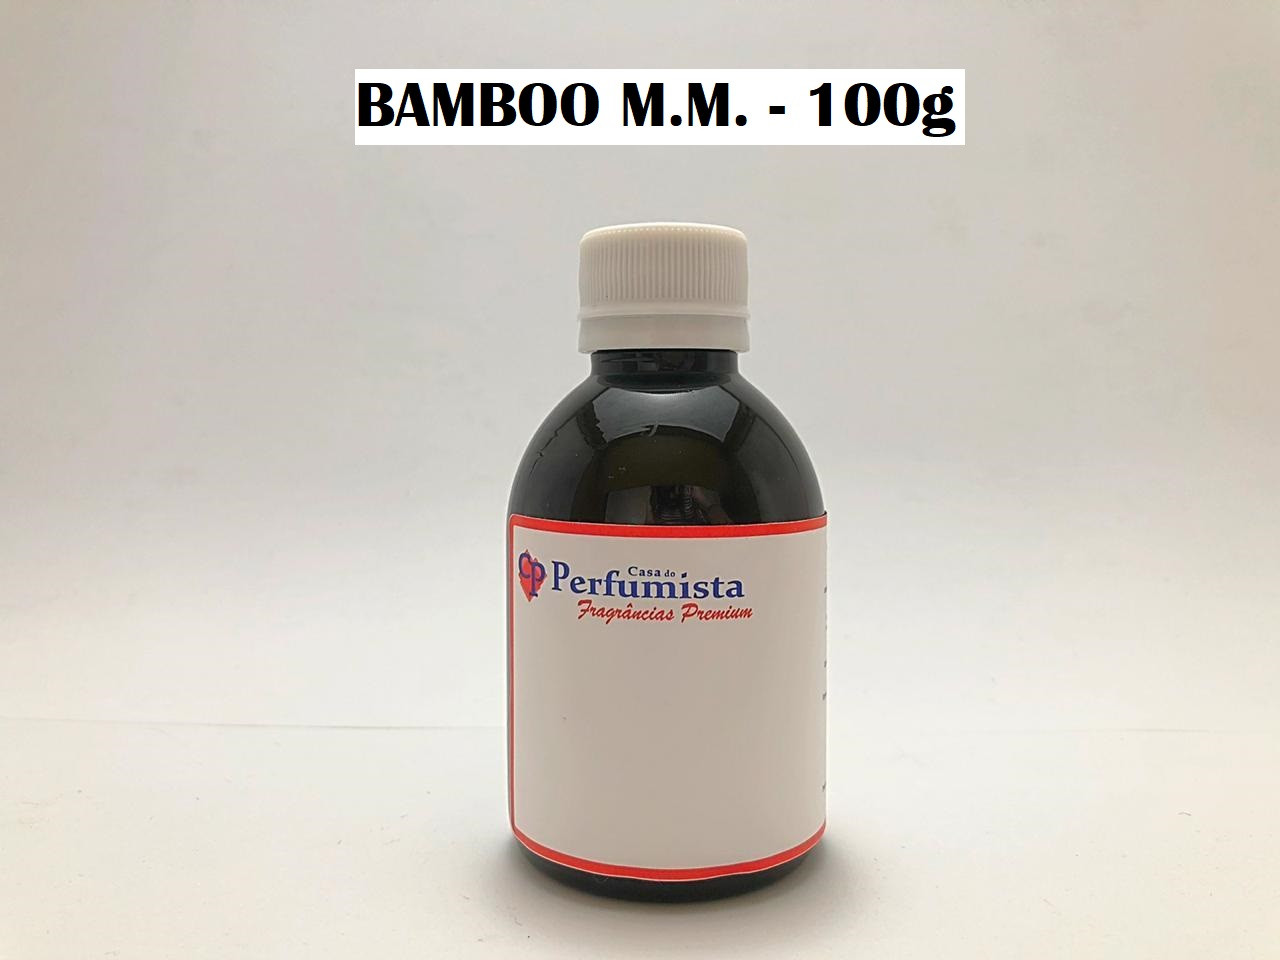 BAMBOO M.M. - 100g